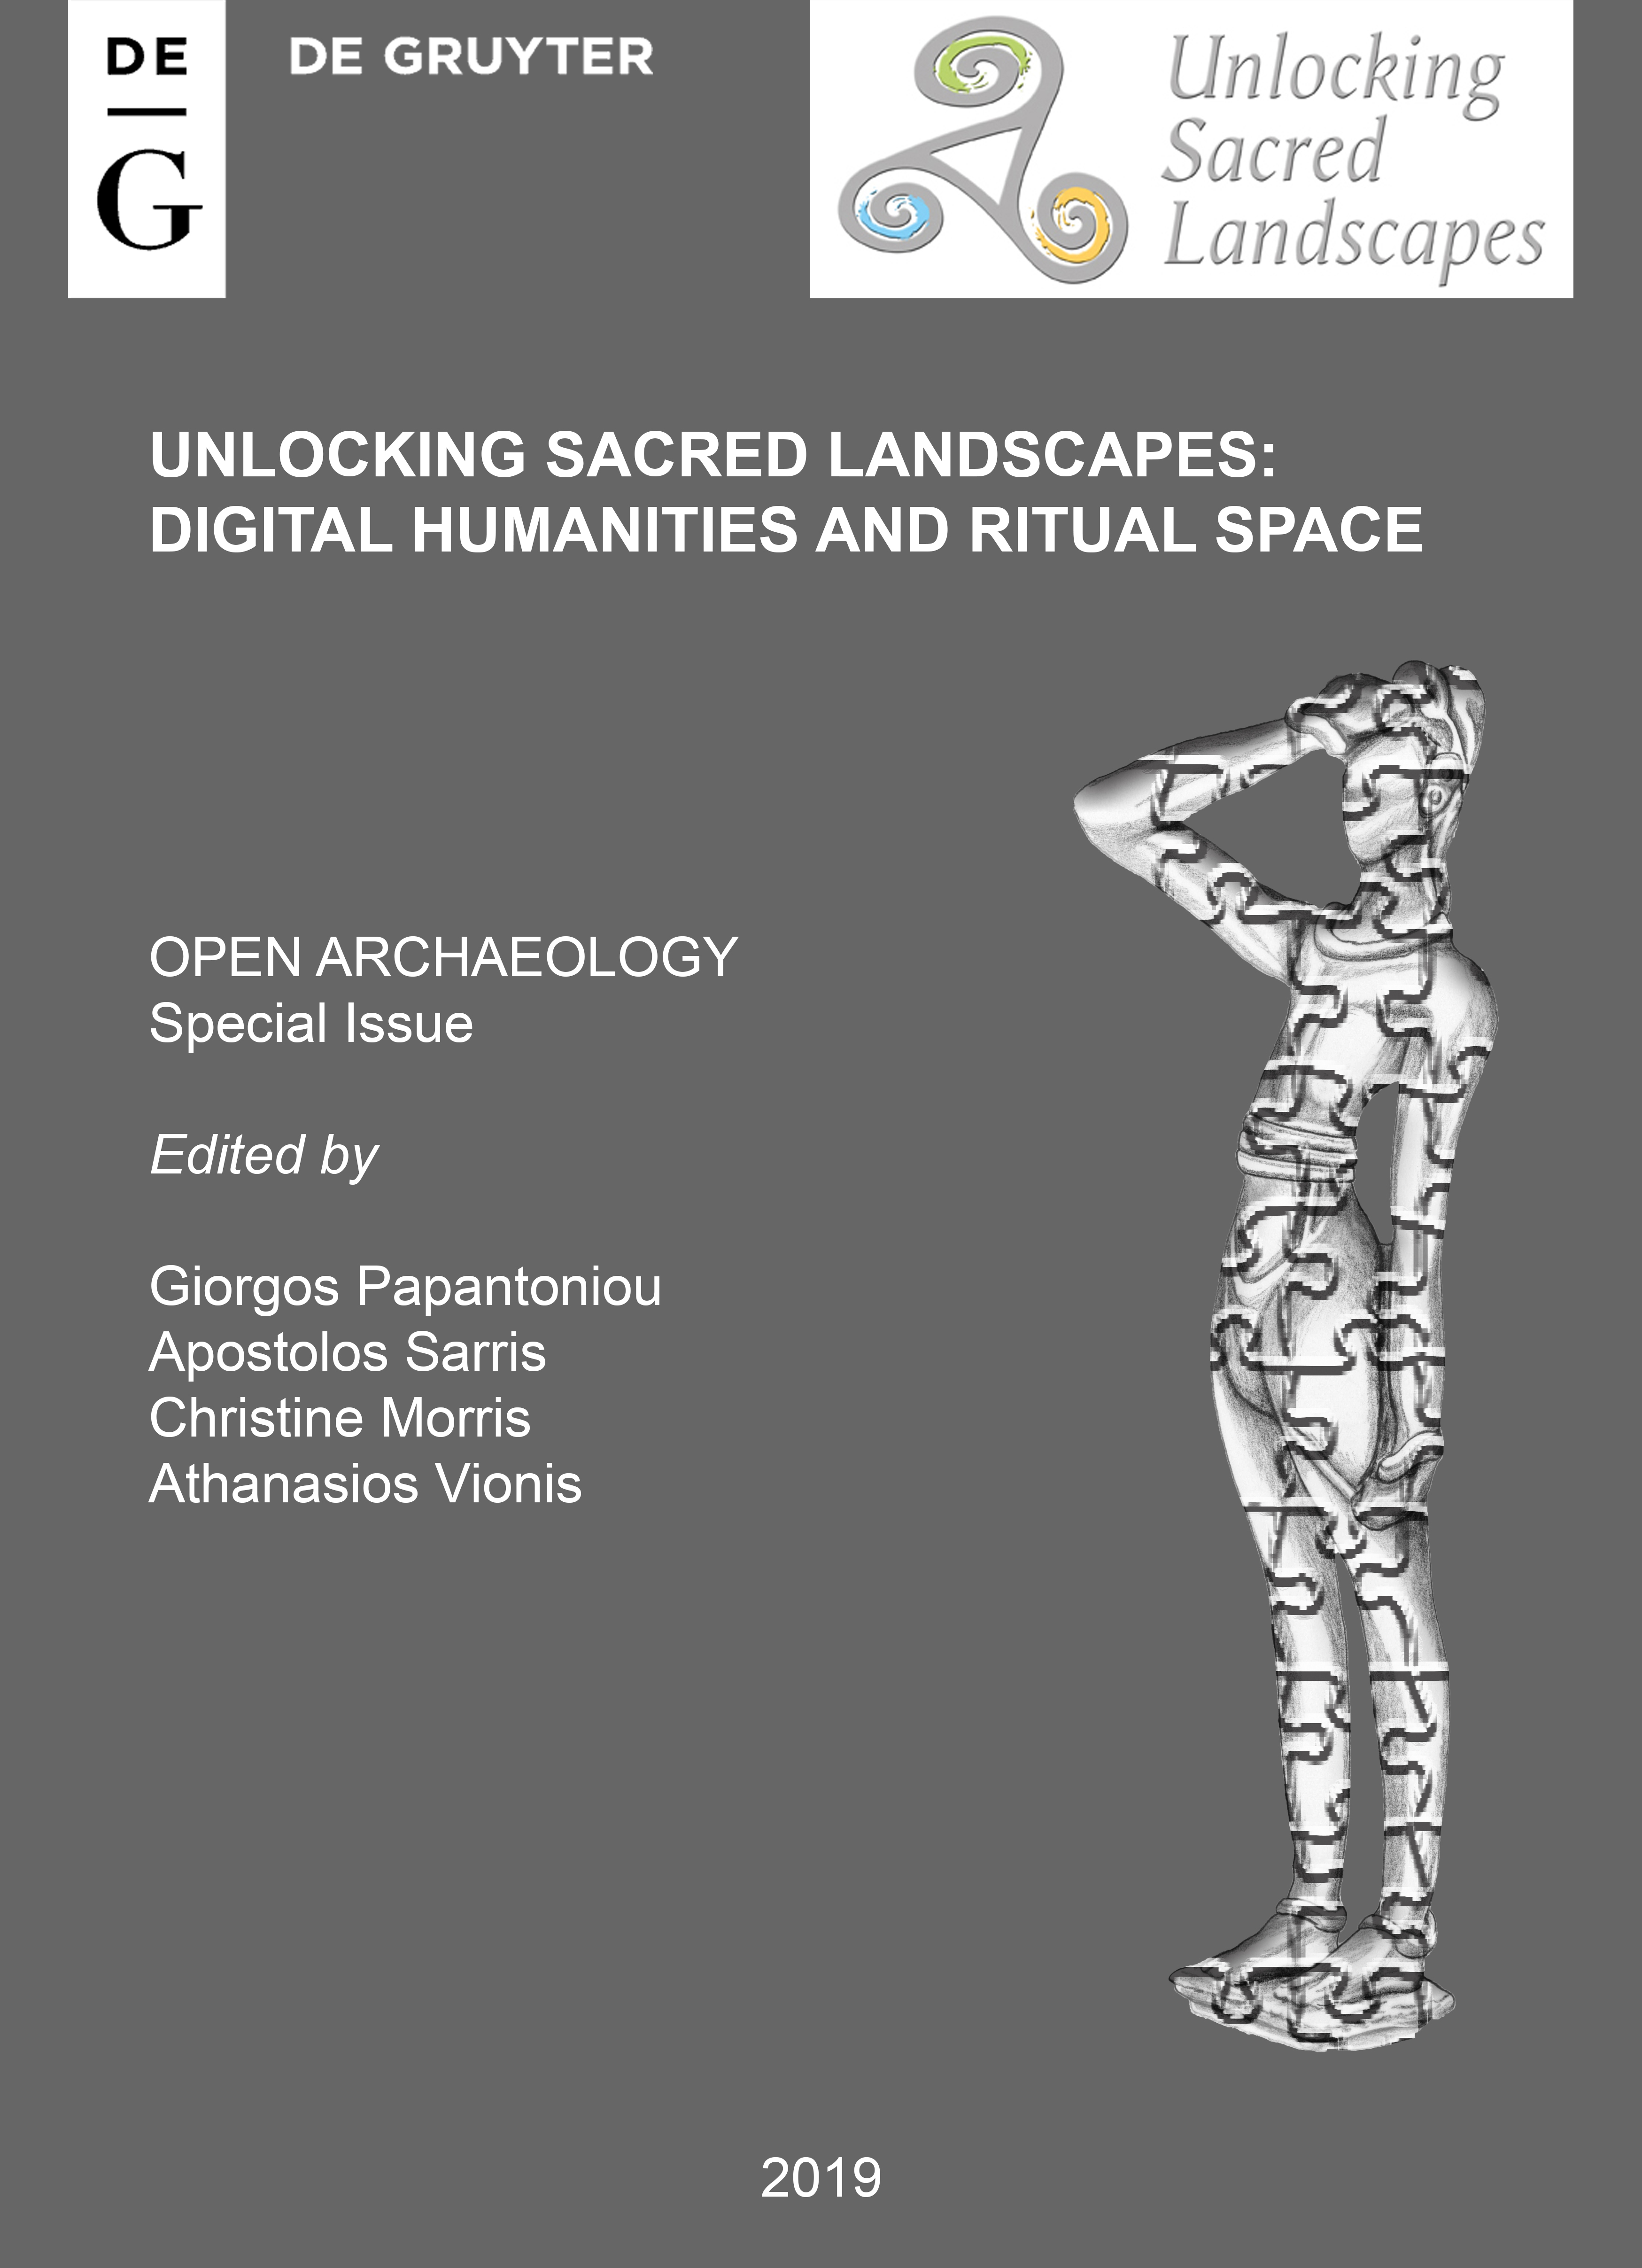 Open Archaeology Digital Humanities